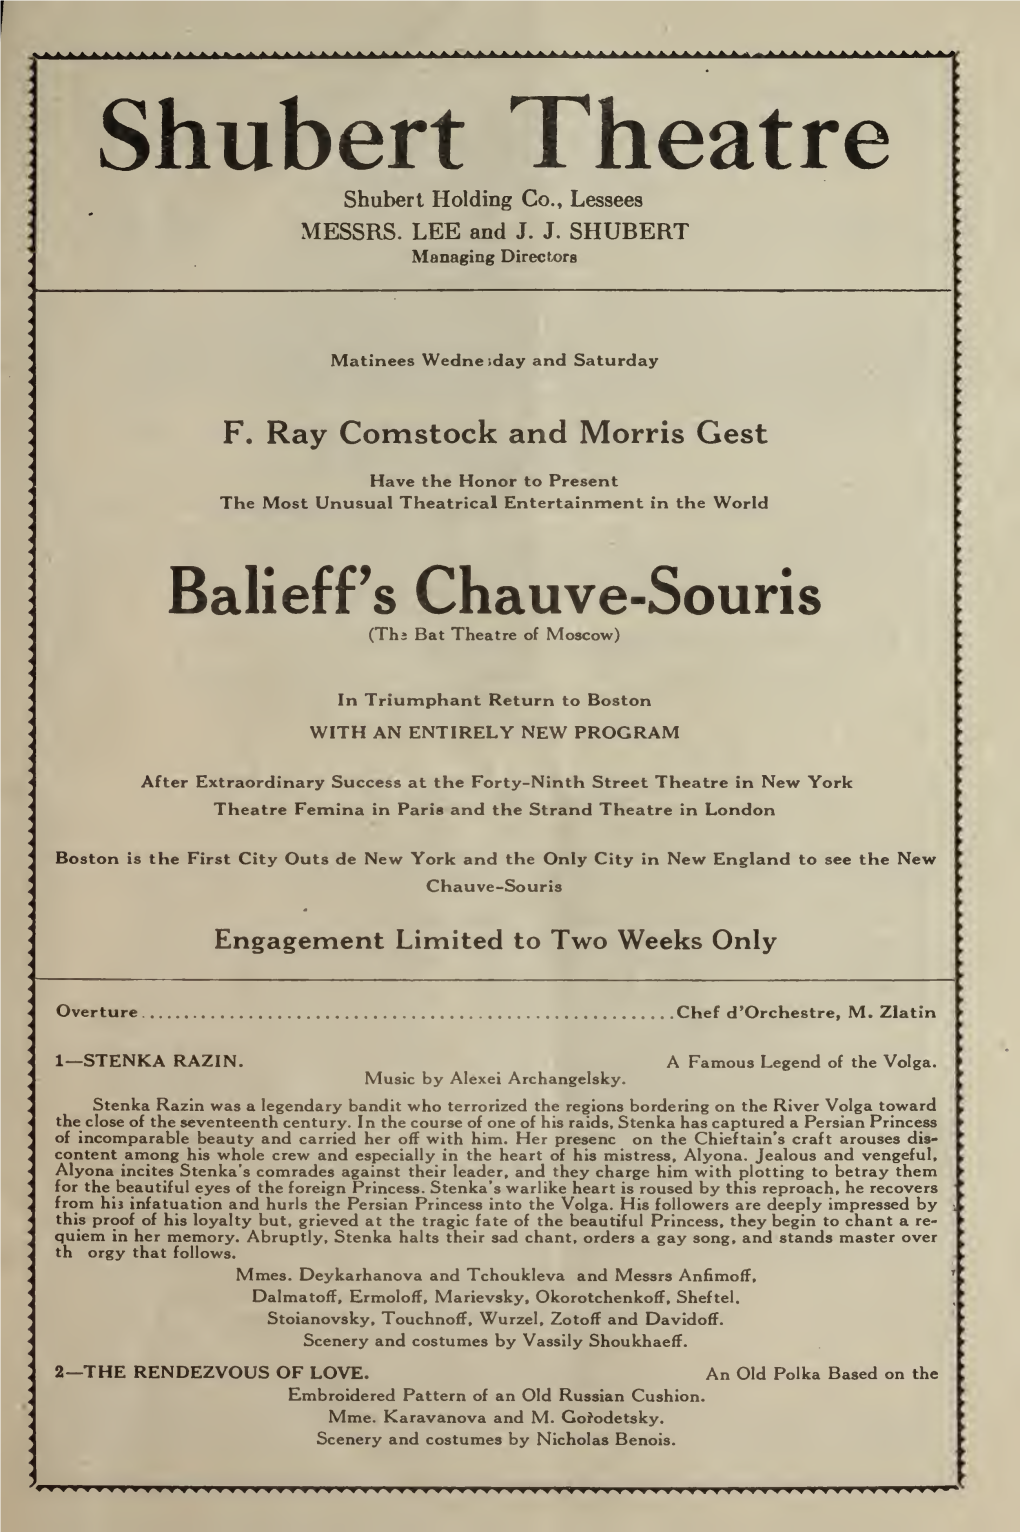 Shubert Theatre Balieff's Chauve-Souris Program